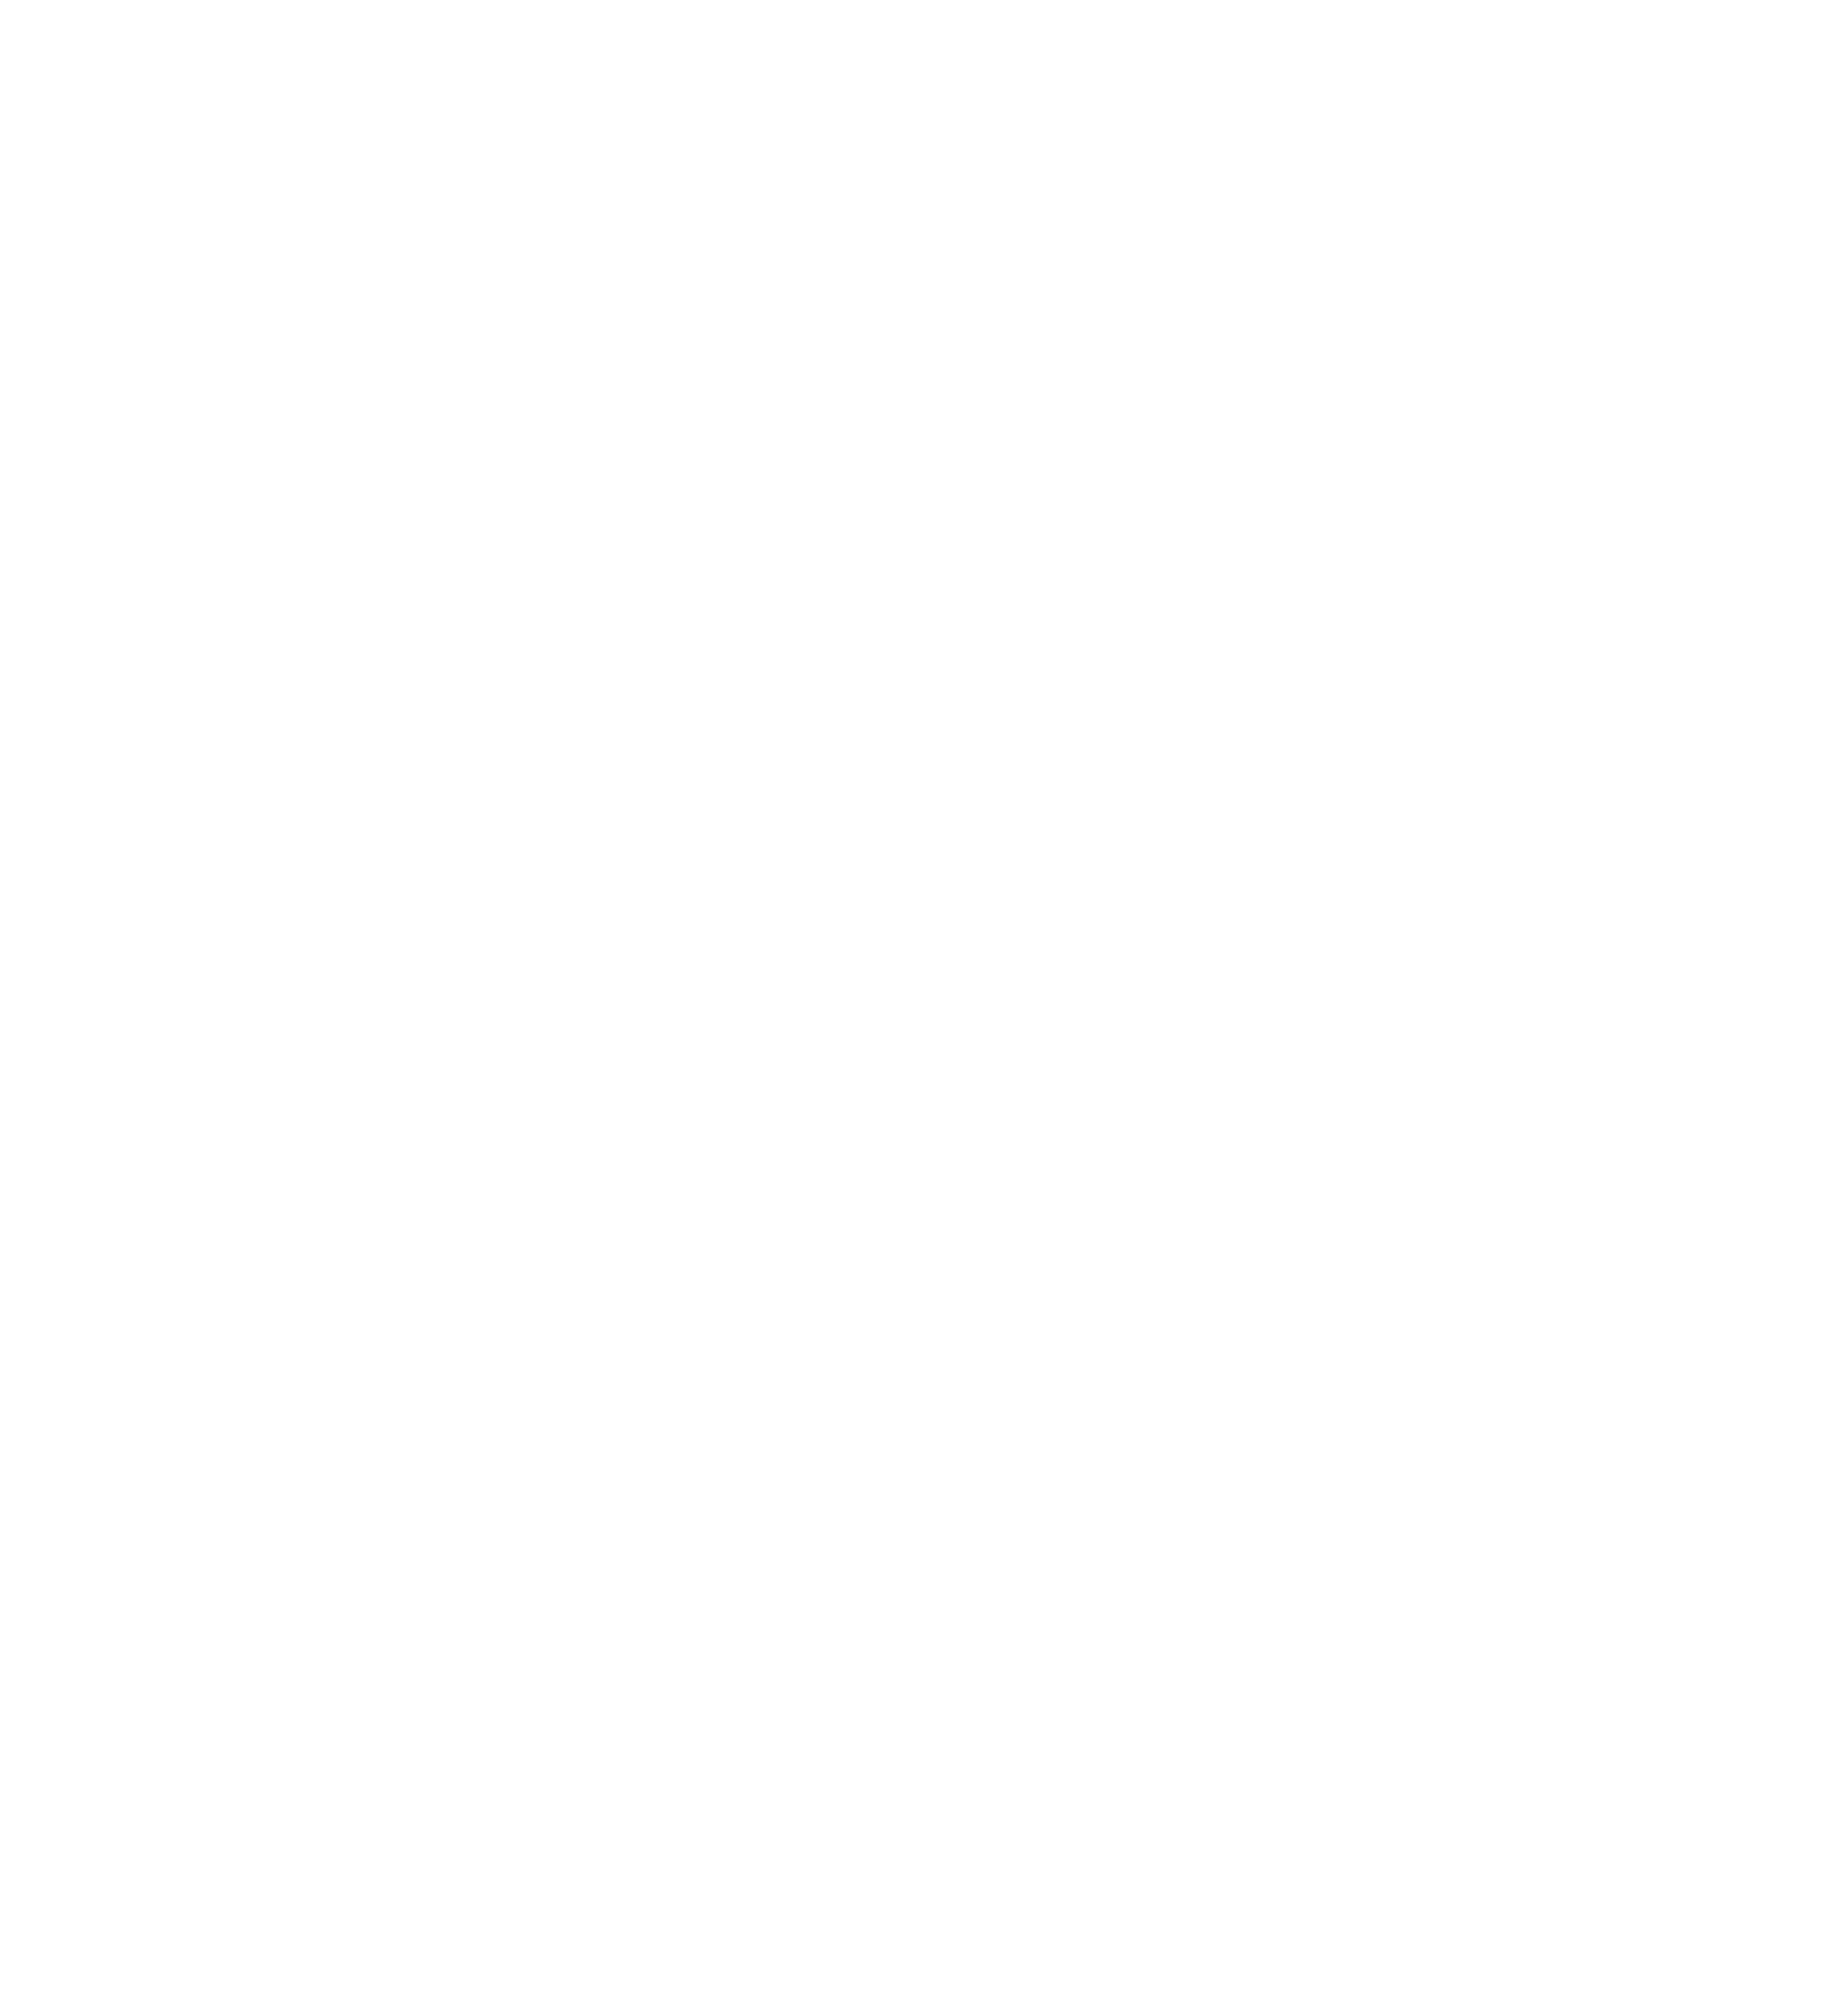 Adopt Me Meow Netbit Systems Llc